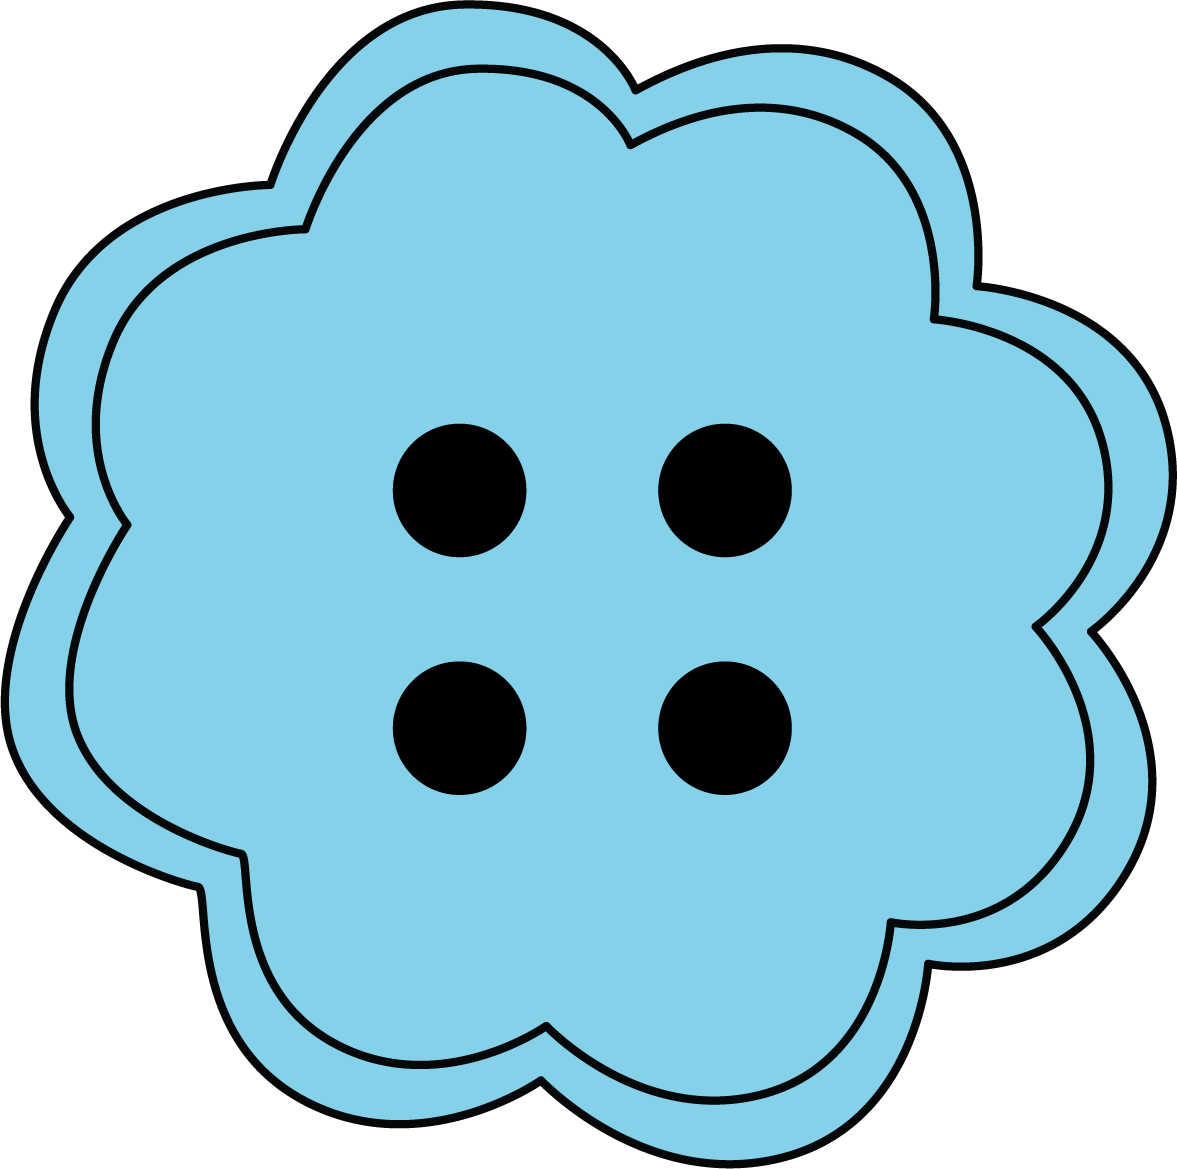 Flower shaped blue button. 4 holes.